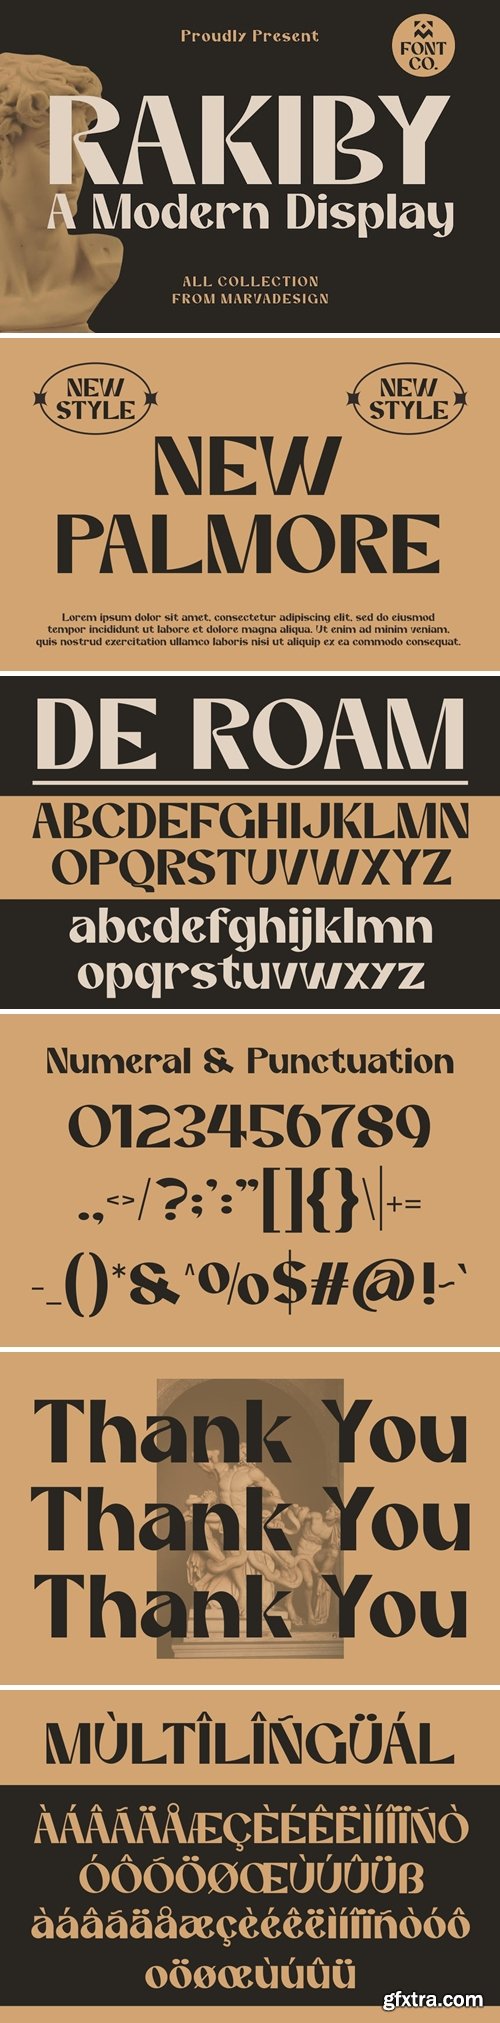 RAKIBY - A Display Typeface Font